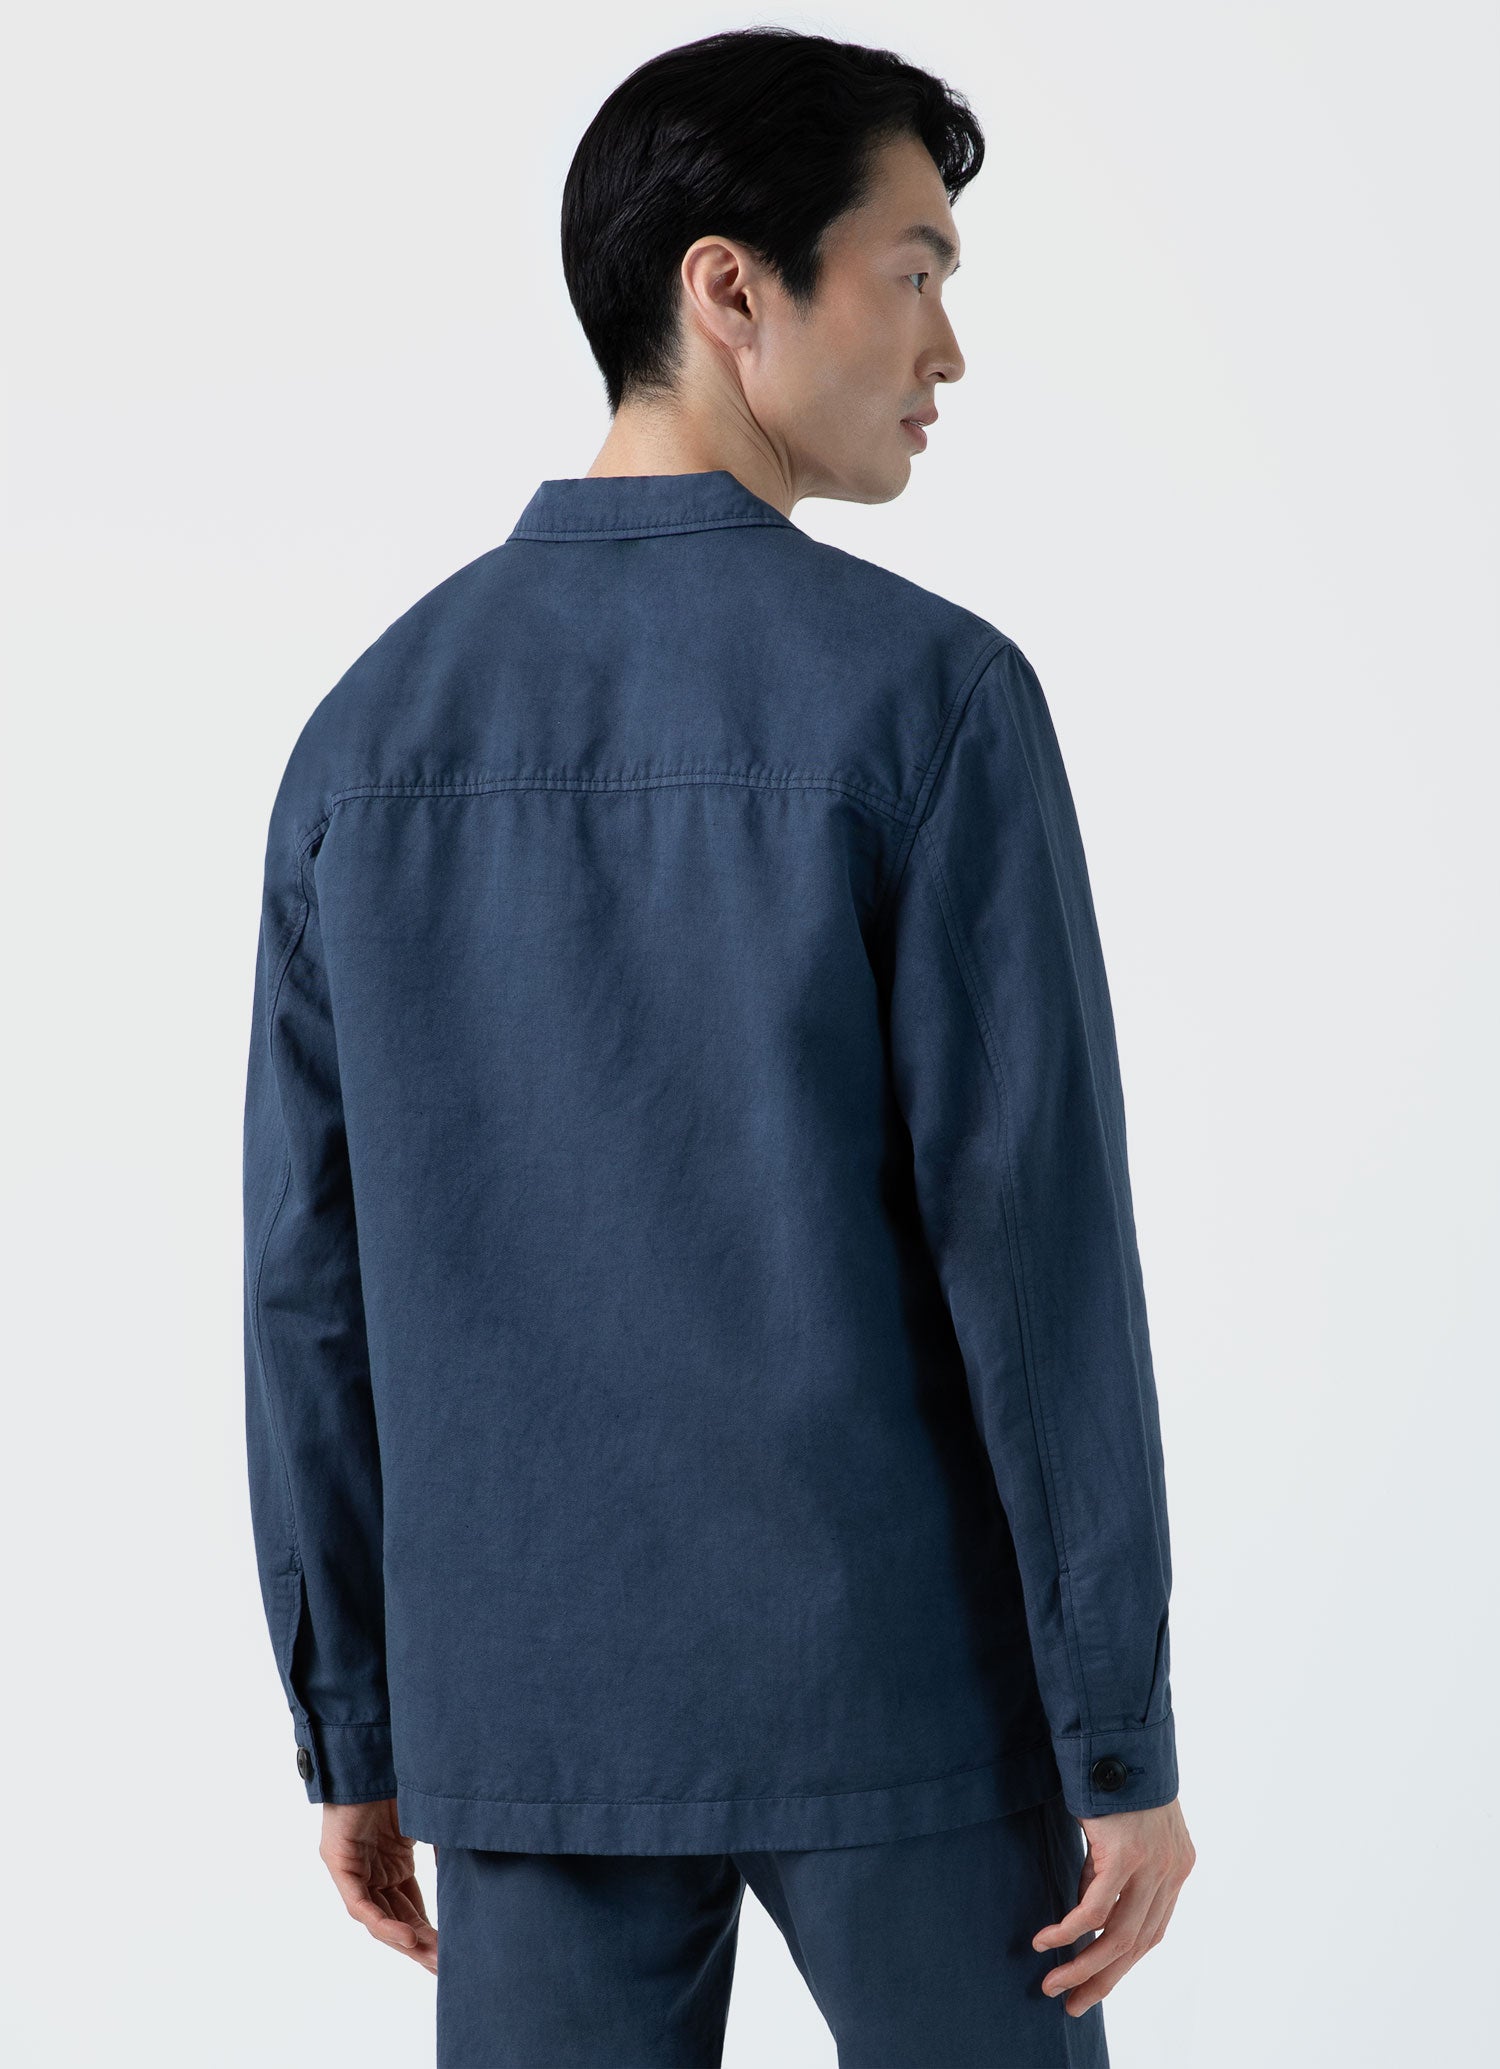 Men's Cotton Linen Twin Pocket Jacket in Shale Blue